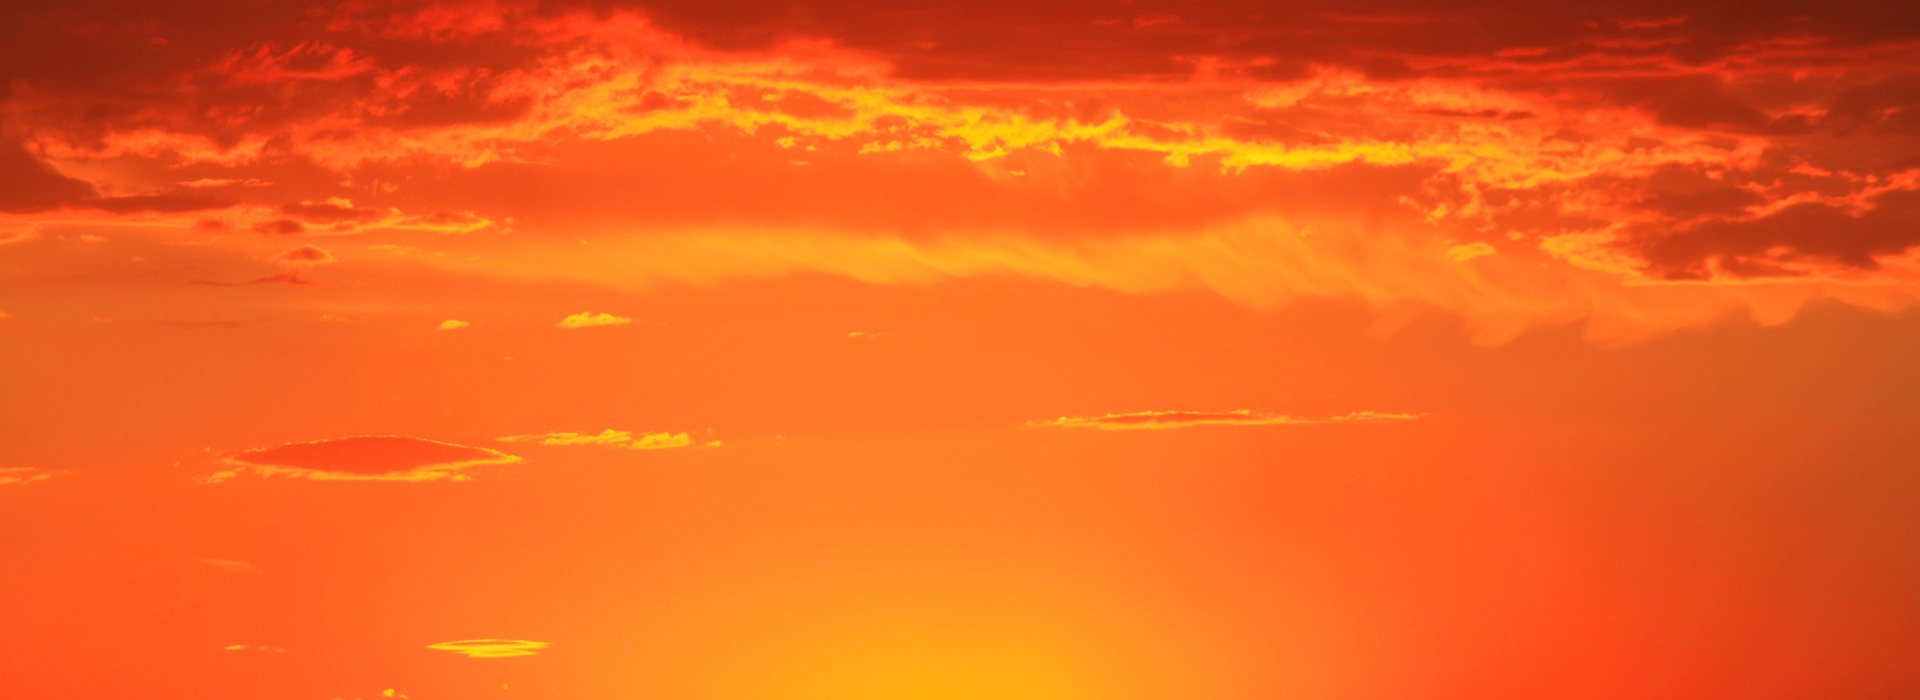 Brilliant orange sunset with tiny cloud streaks